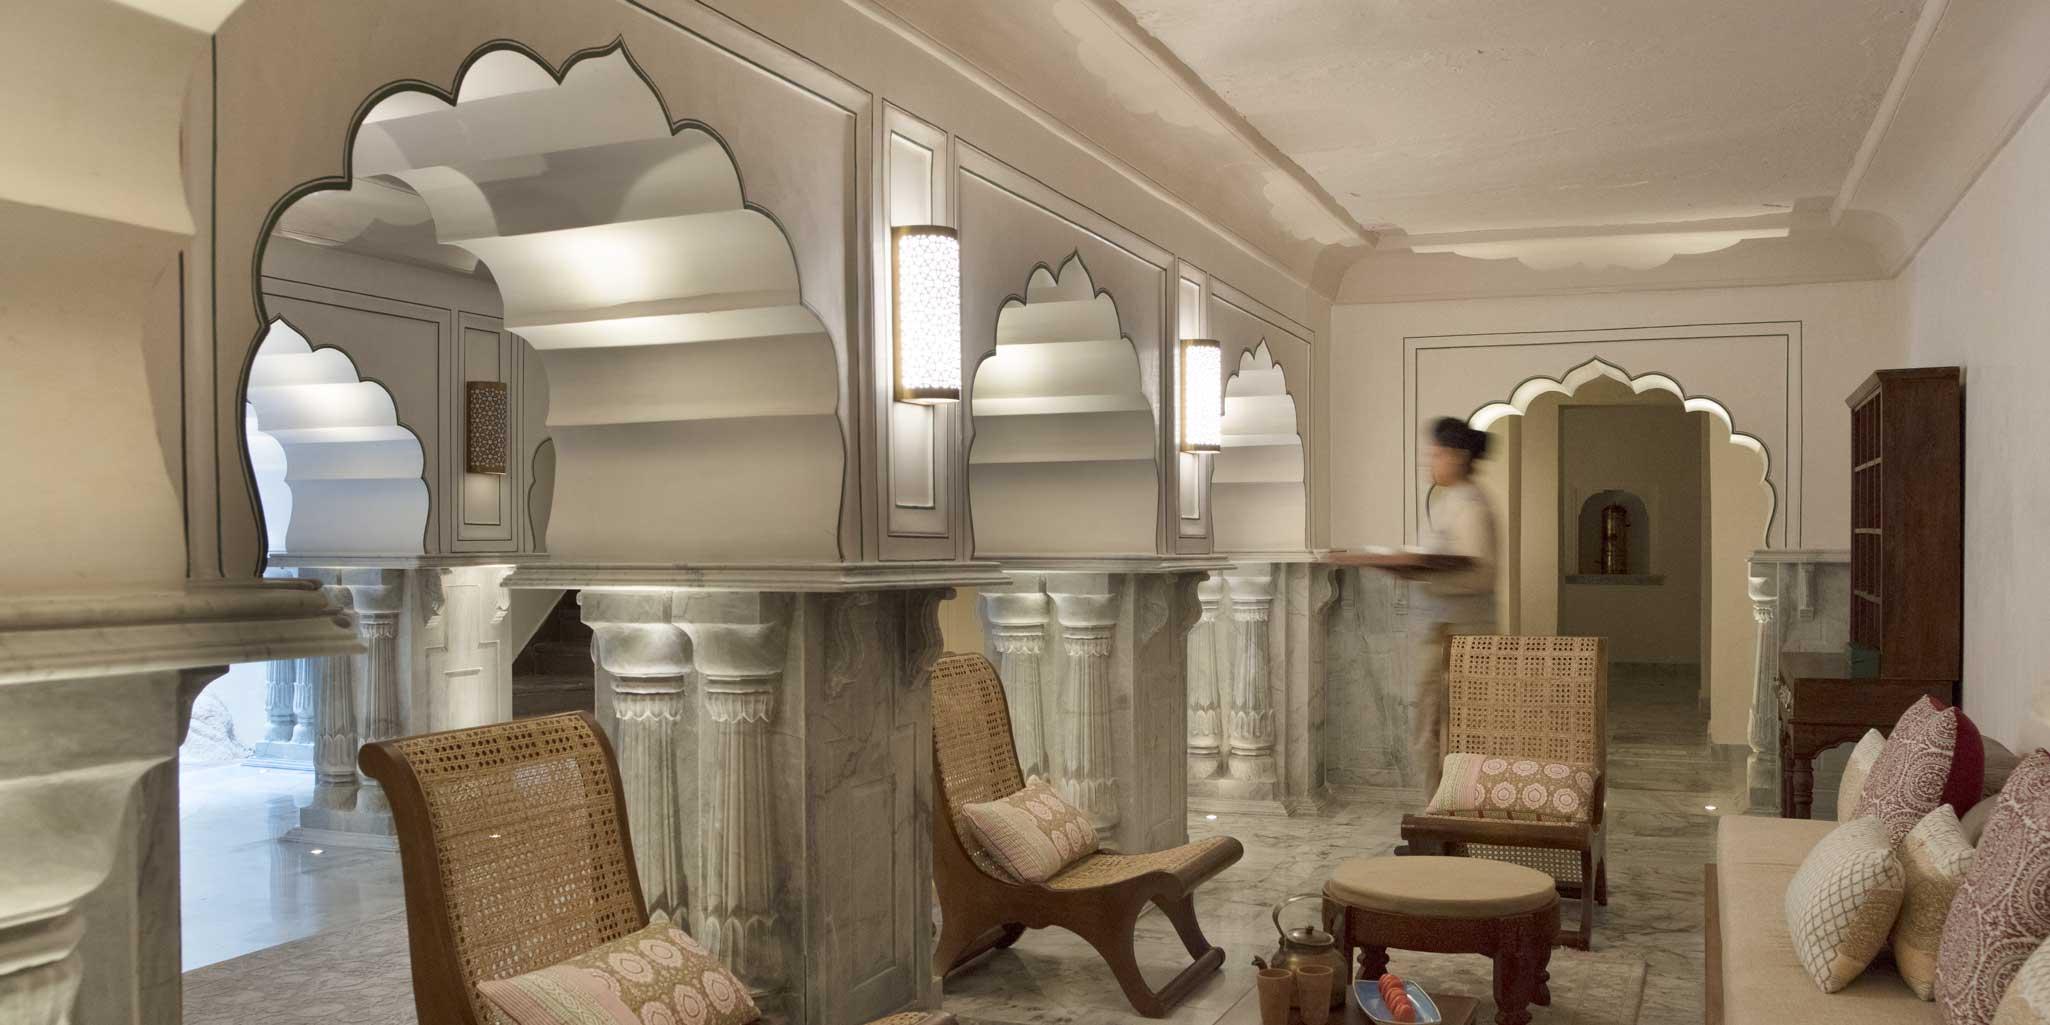 Lounge with ornate doorways